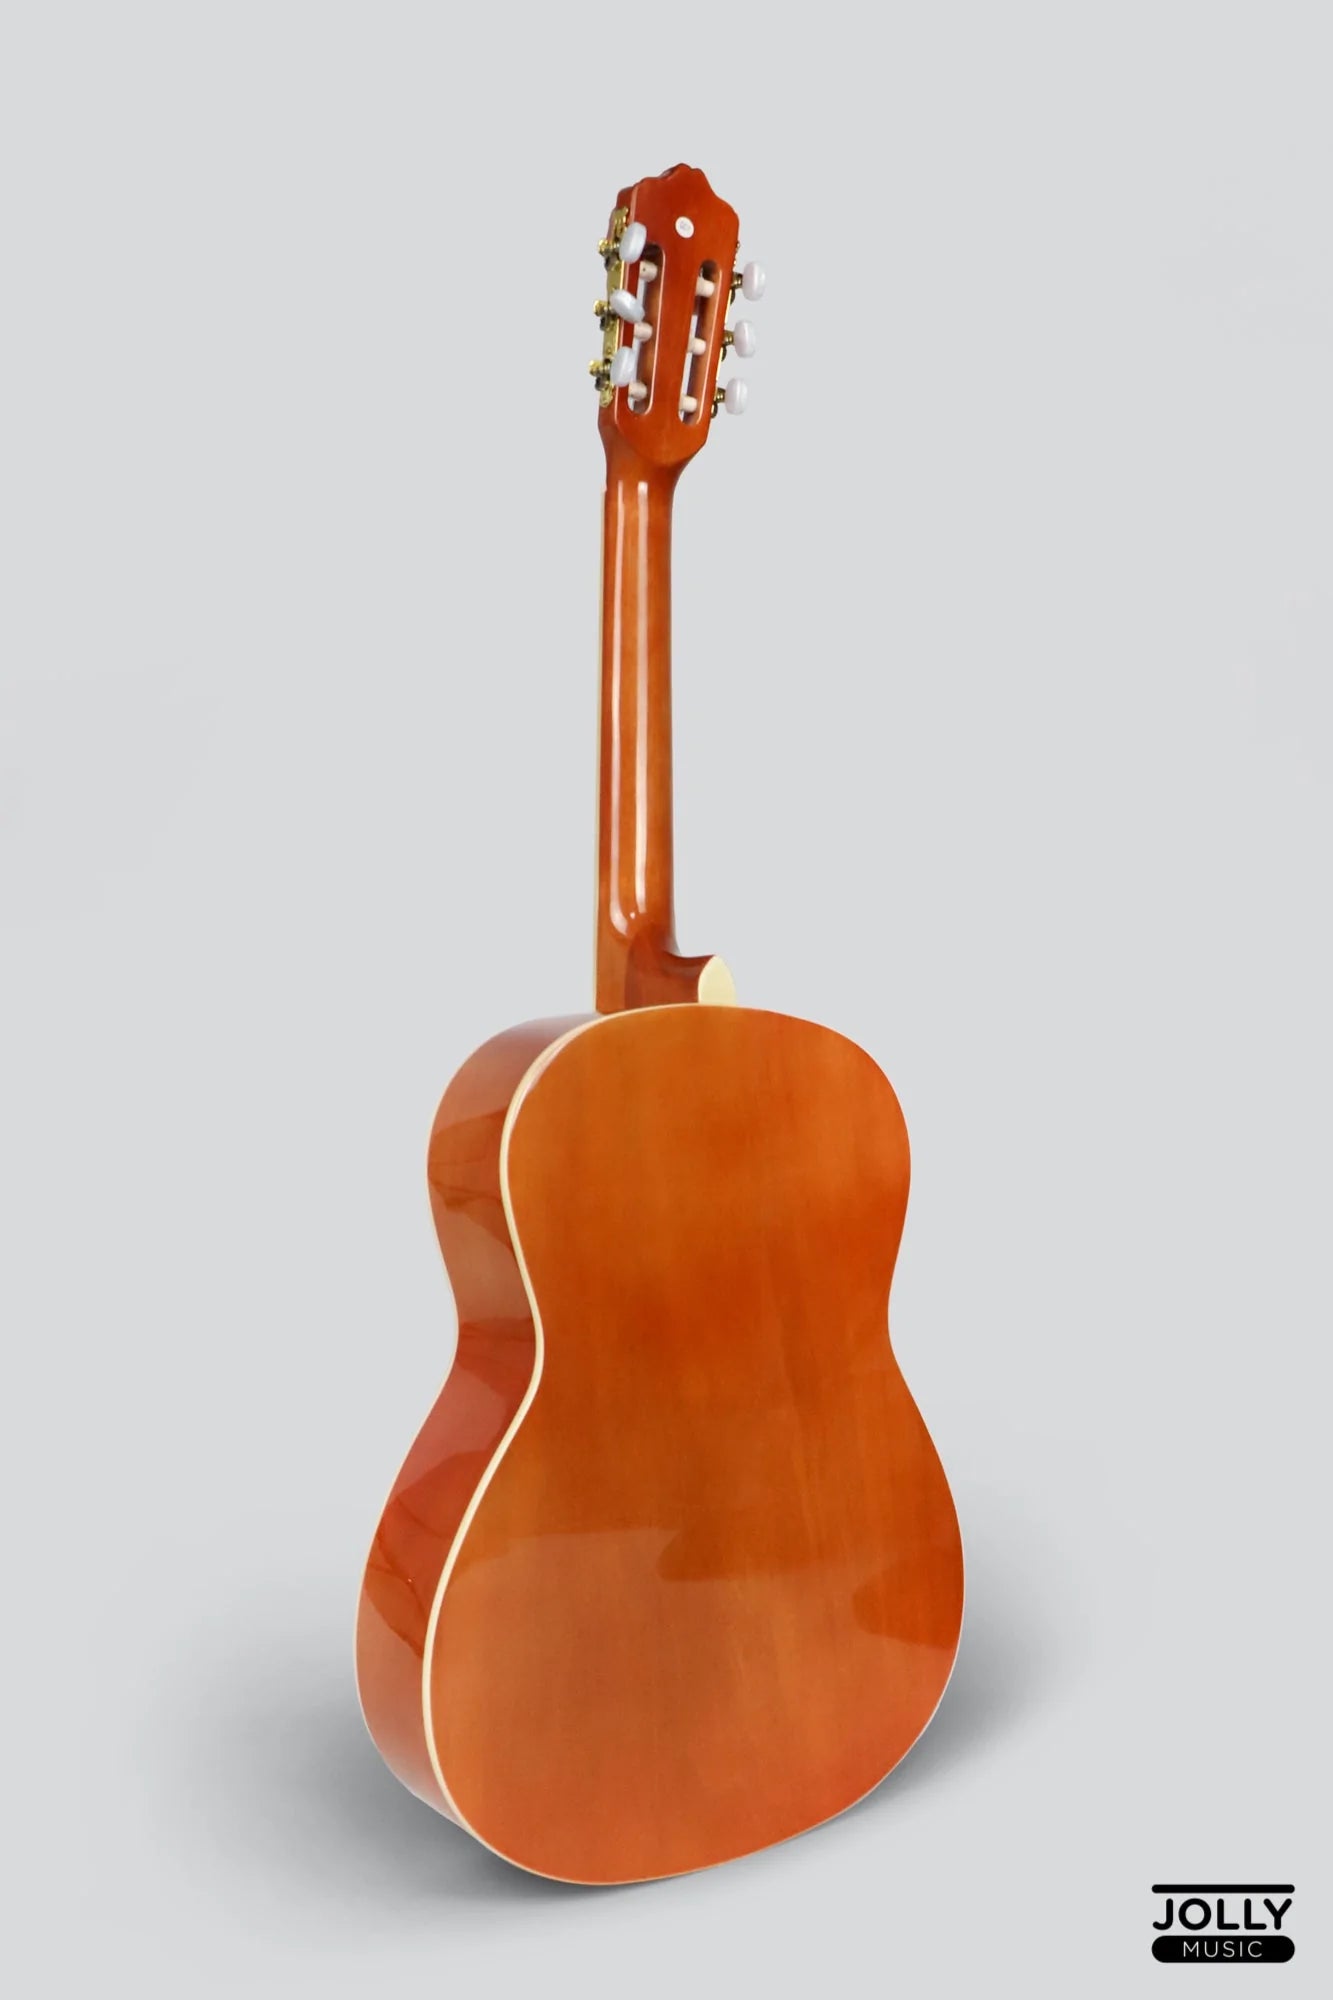 Deviser L-310-39-YN EQ Spruce Top Classical Guitar (Natural) with Devsier KLT-17A Pickup